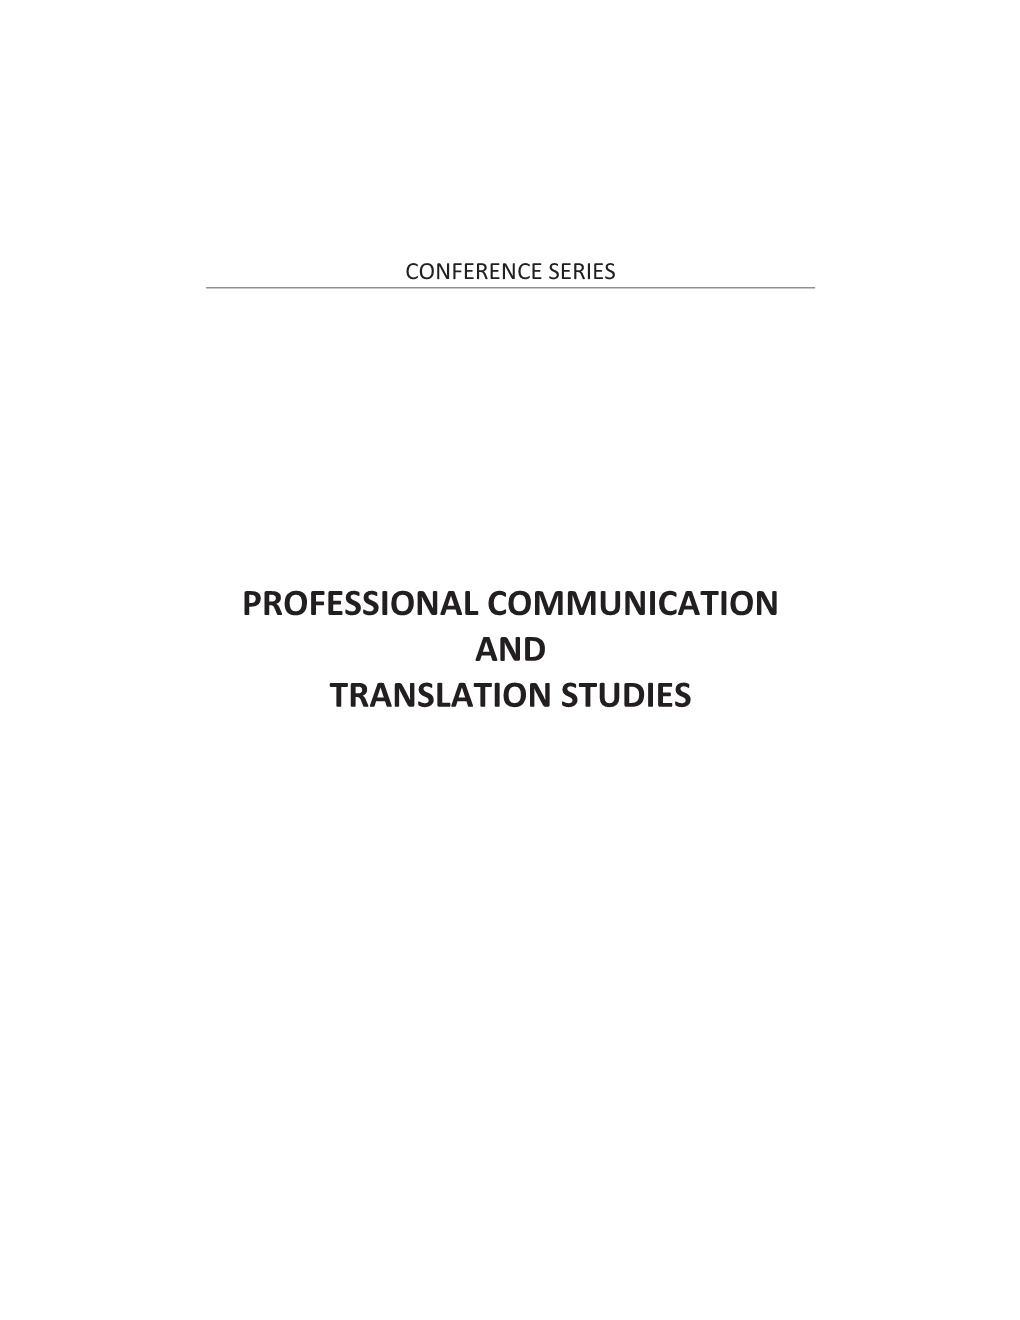 Professional Communication and Translation Studies